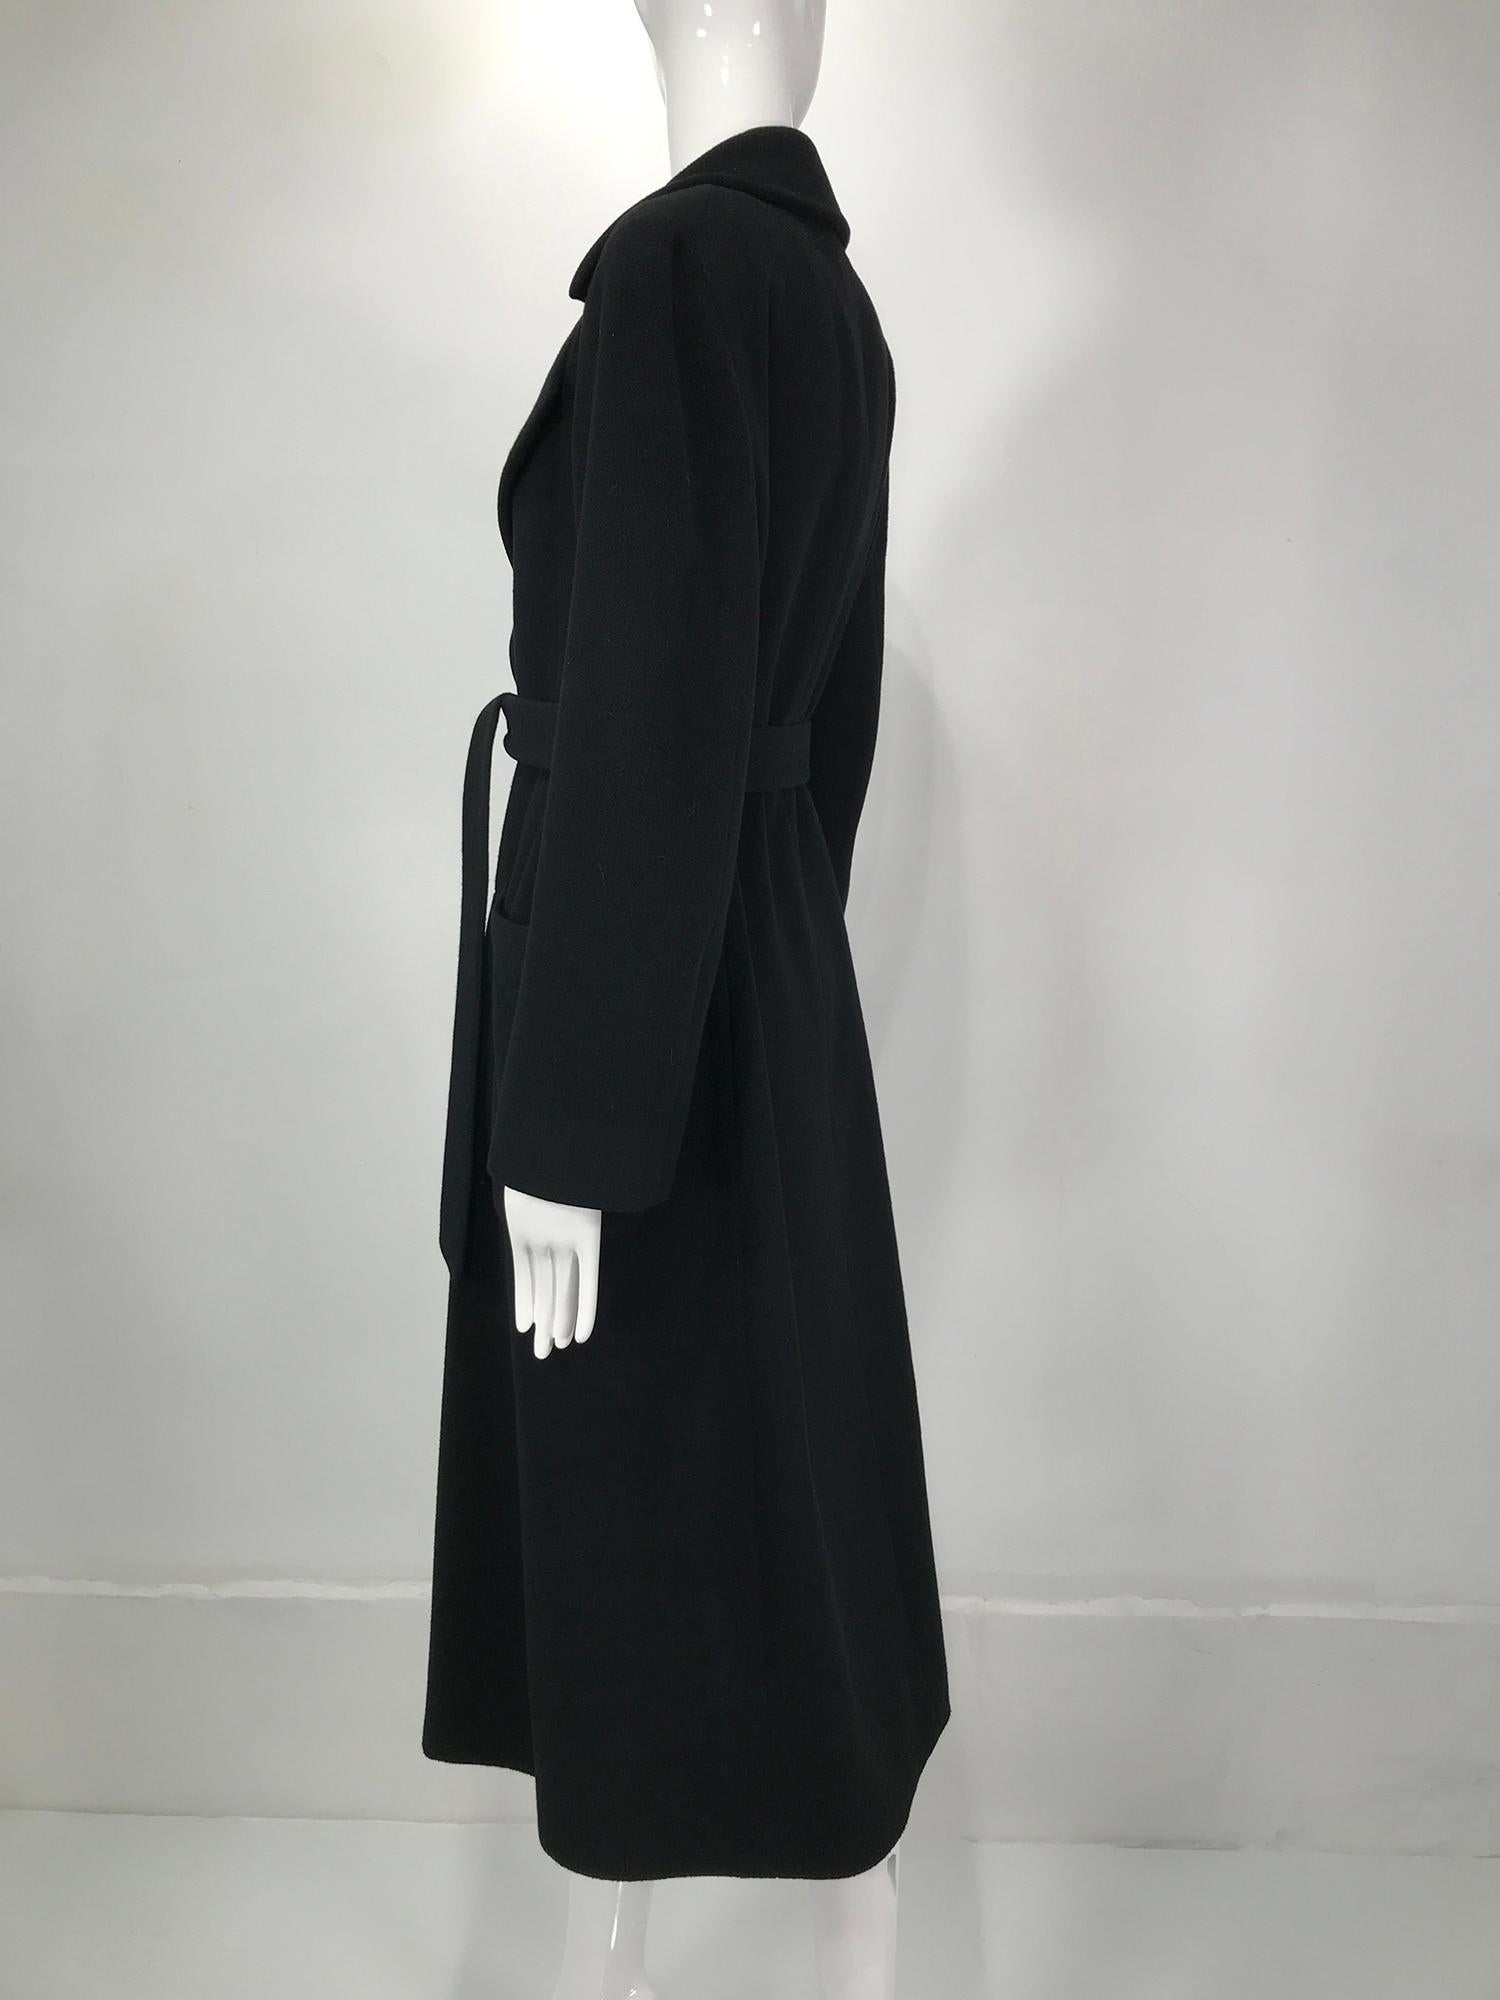 Donna Karan Black Cashmere Wrap Coat 10 2